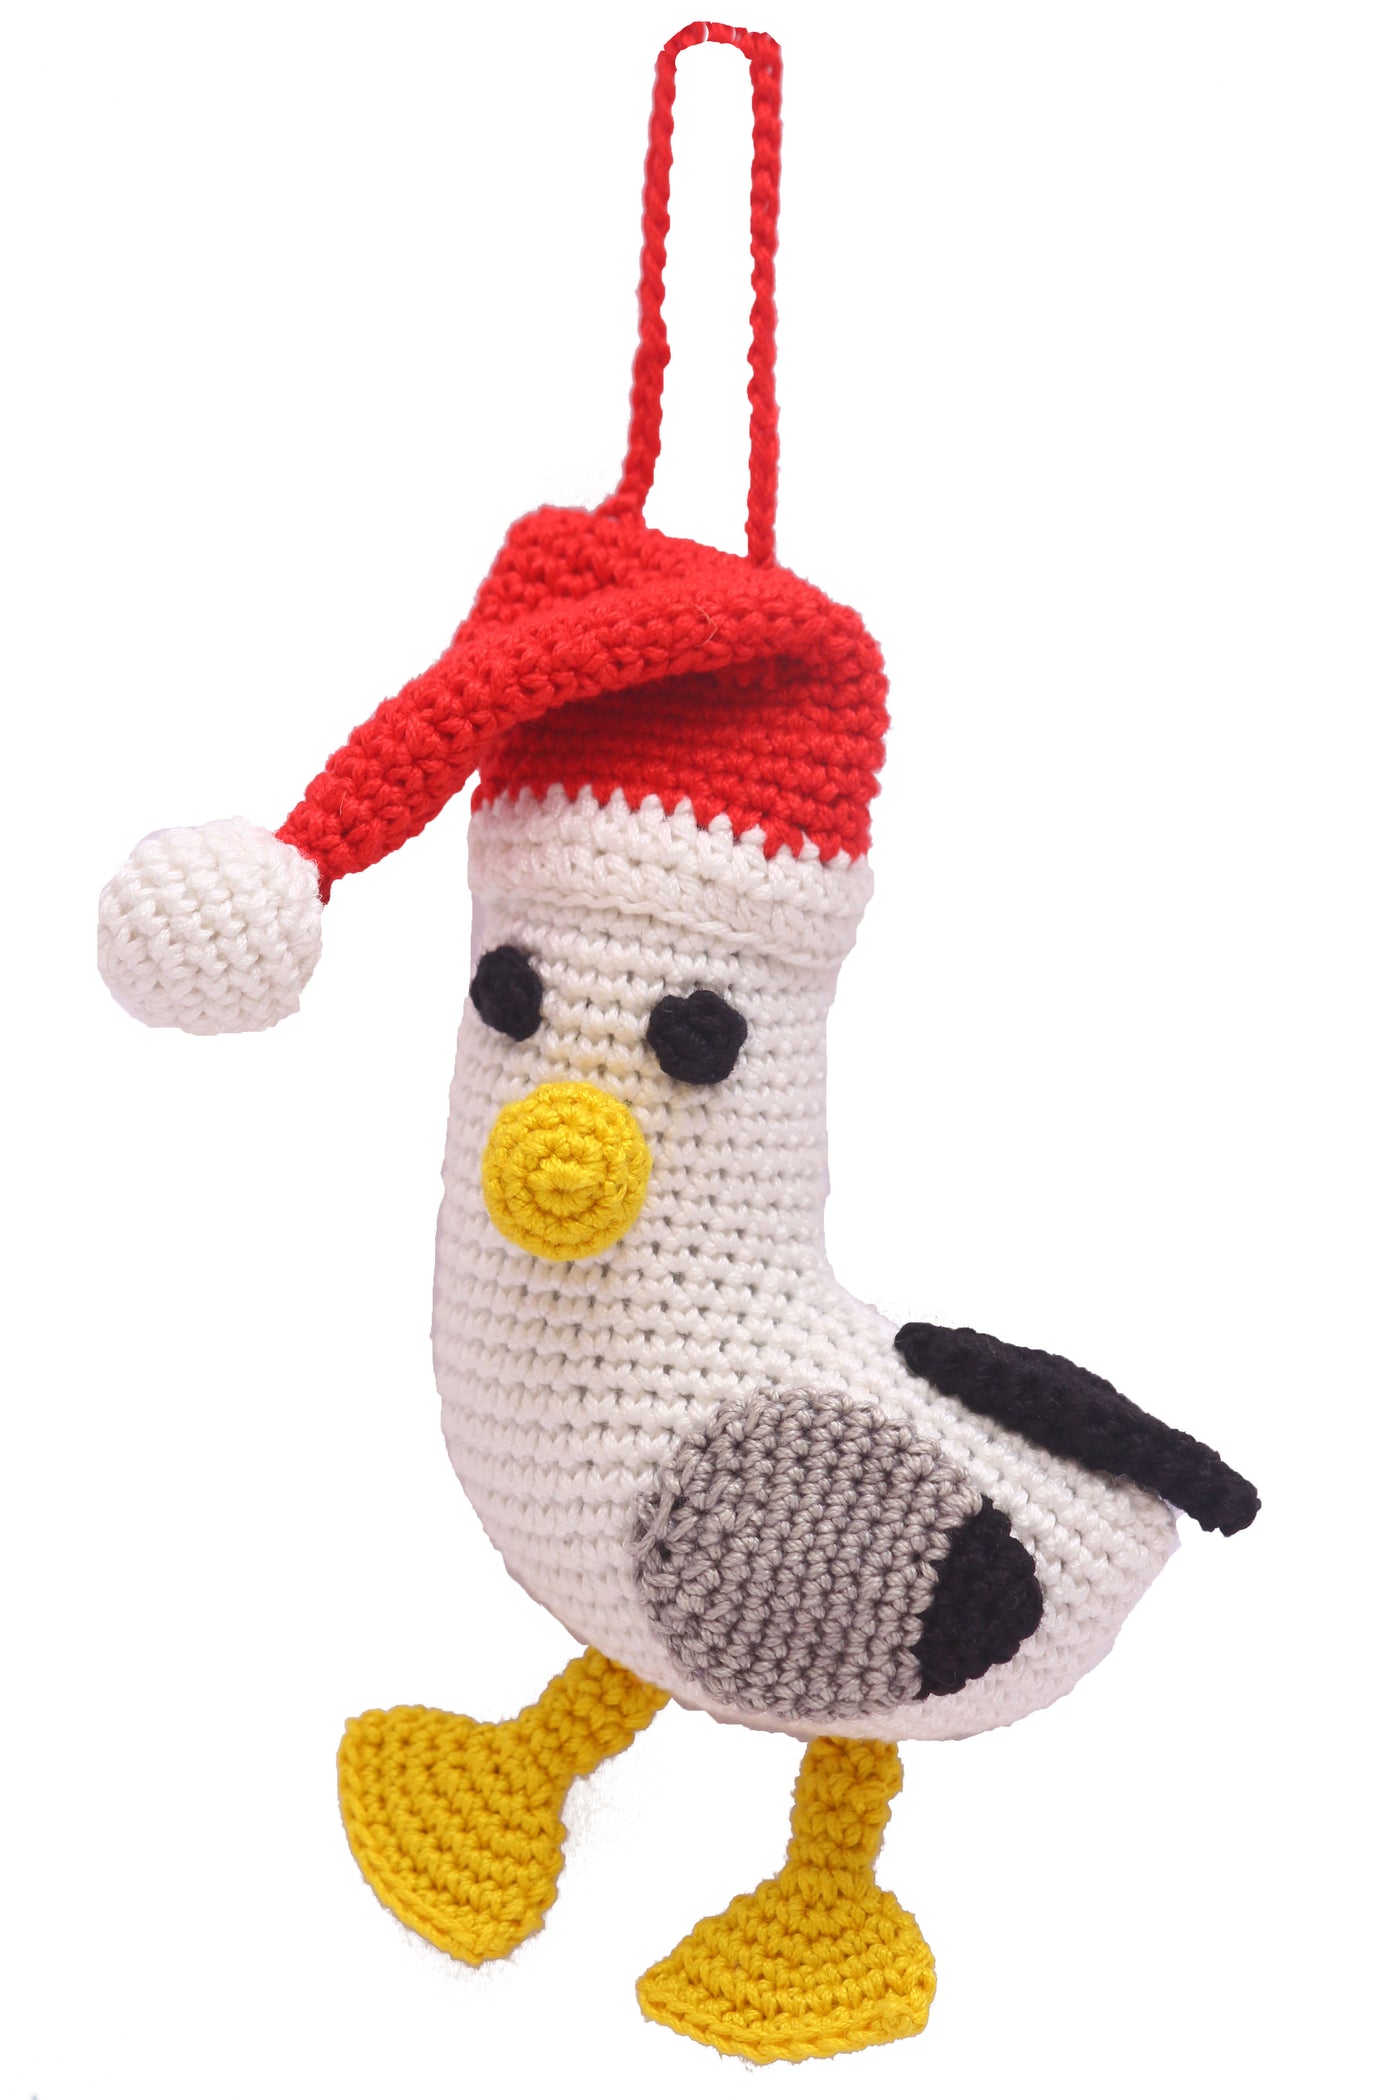 Handcrafted Amigurumi Christmas Tree Ornament-
Seagull